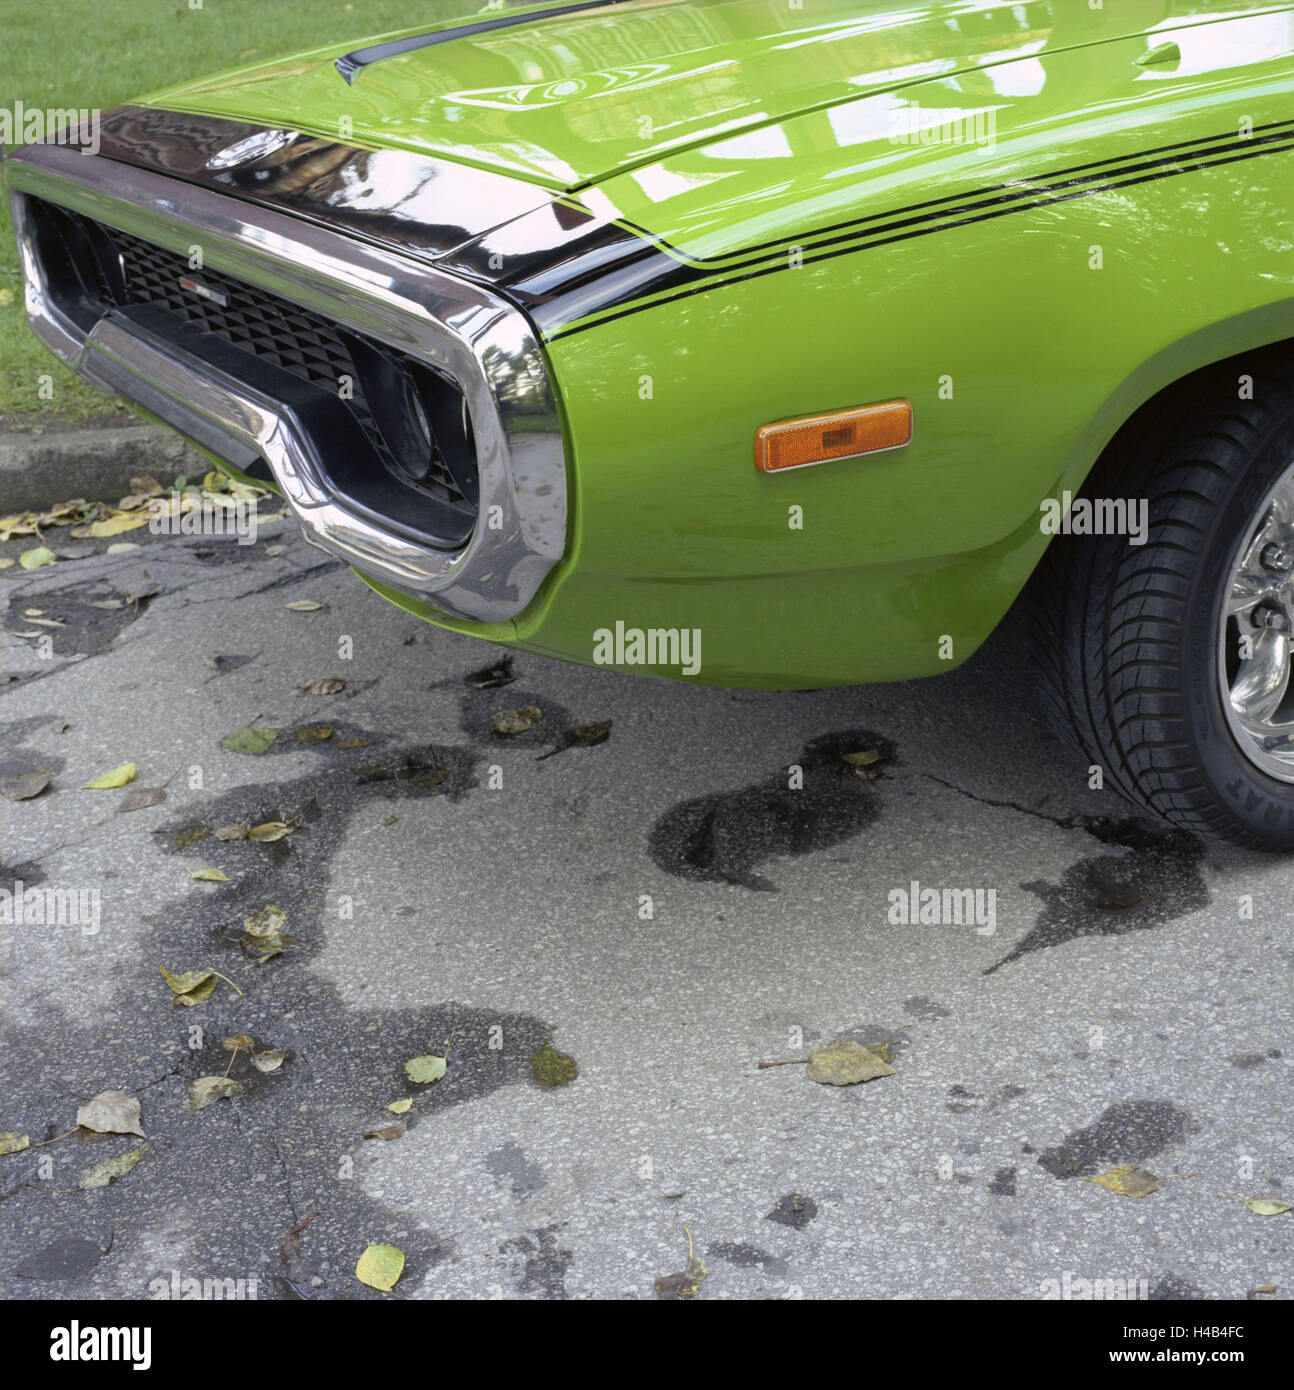 Dodge charger muscle car -Fotos und -Bildmaterial in hoher Auflösung – Alamy